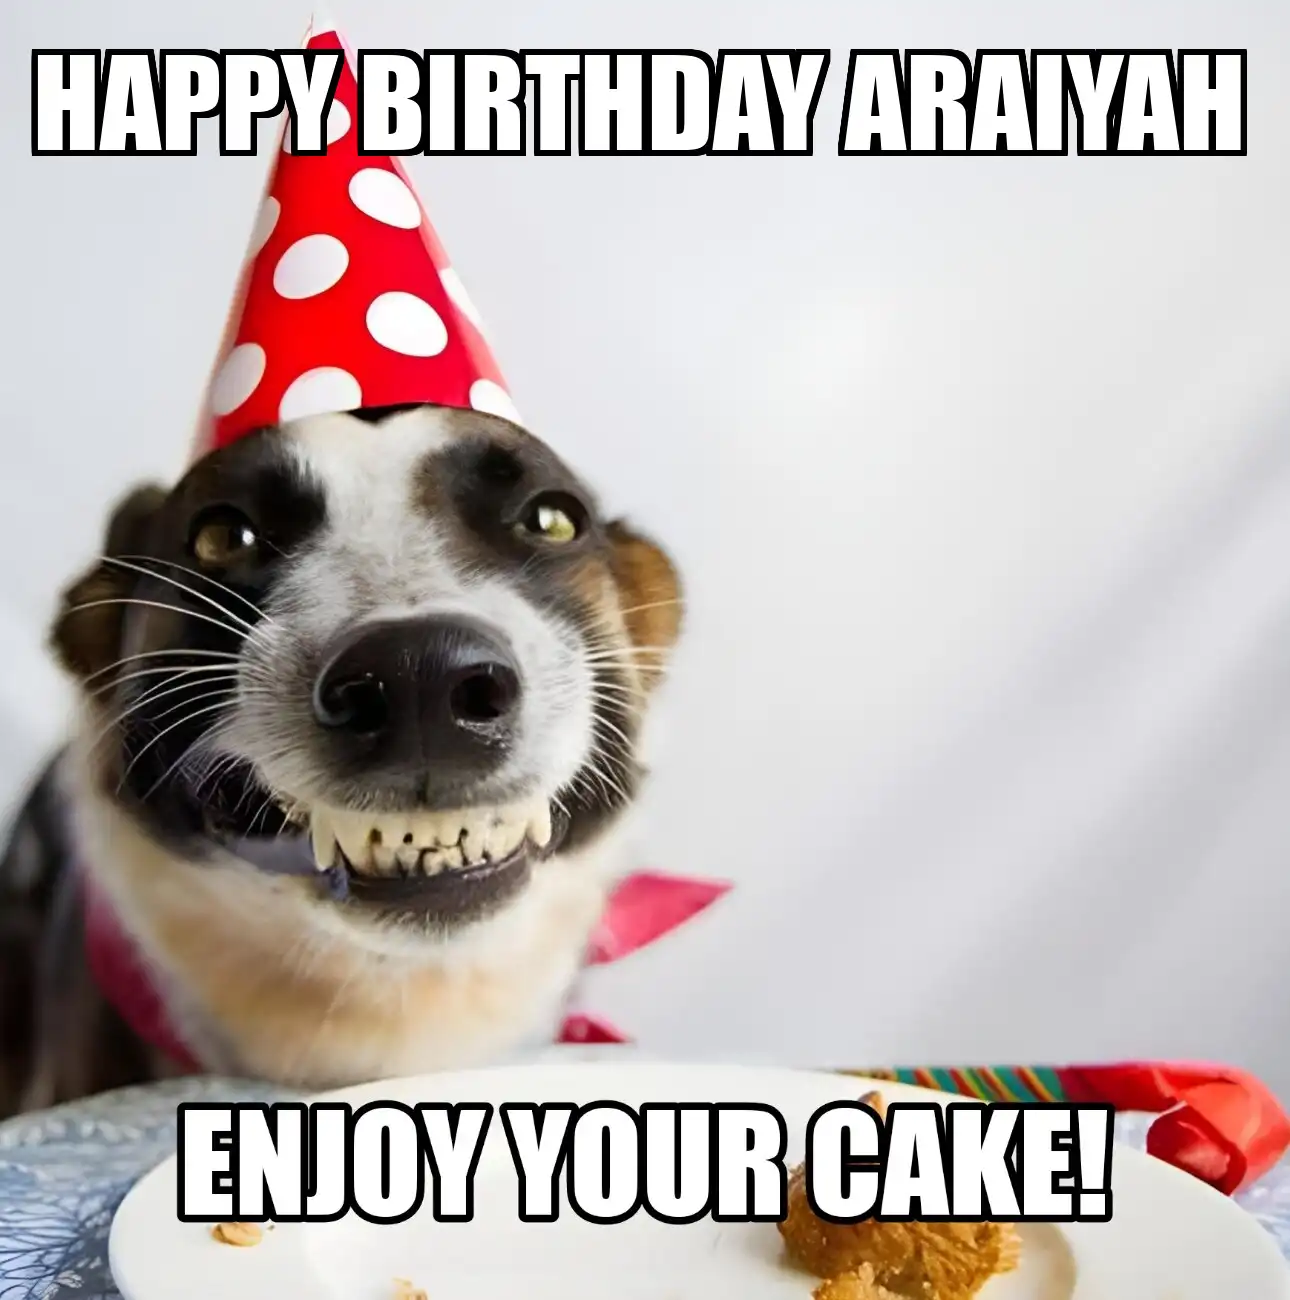 Happy Birthday Araiyah Enjoy Your Cake Dog Meme